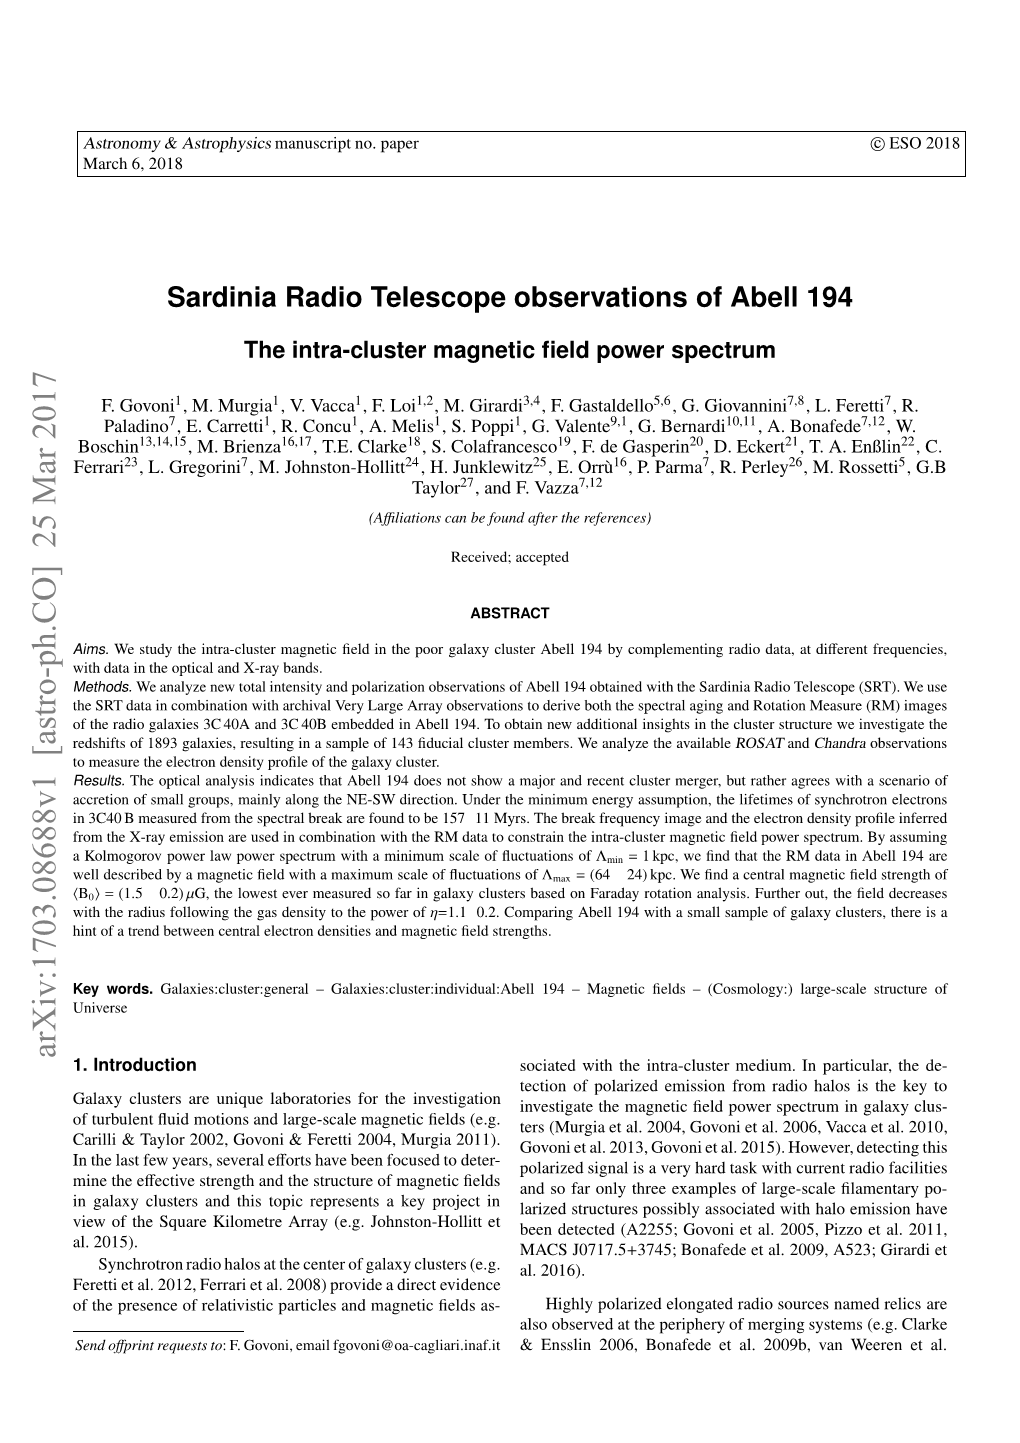 Sardinia Radio Telescope Observations of Abell 194